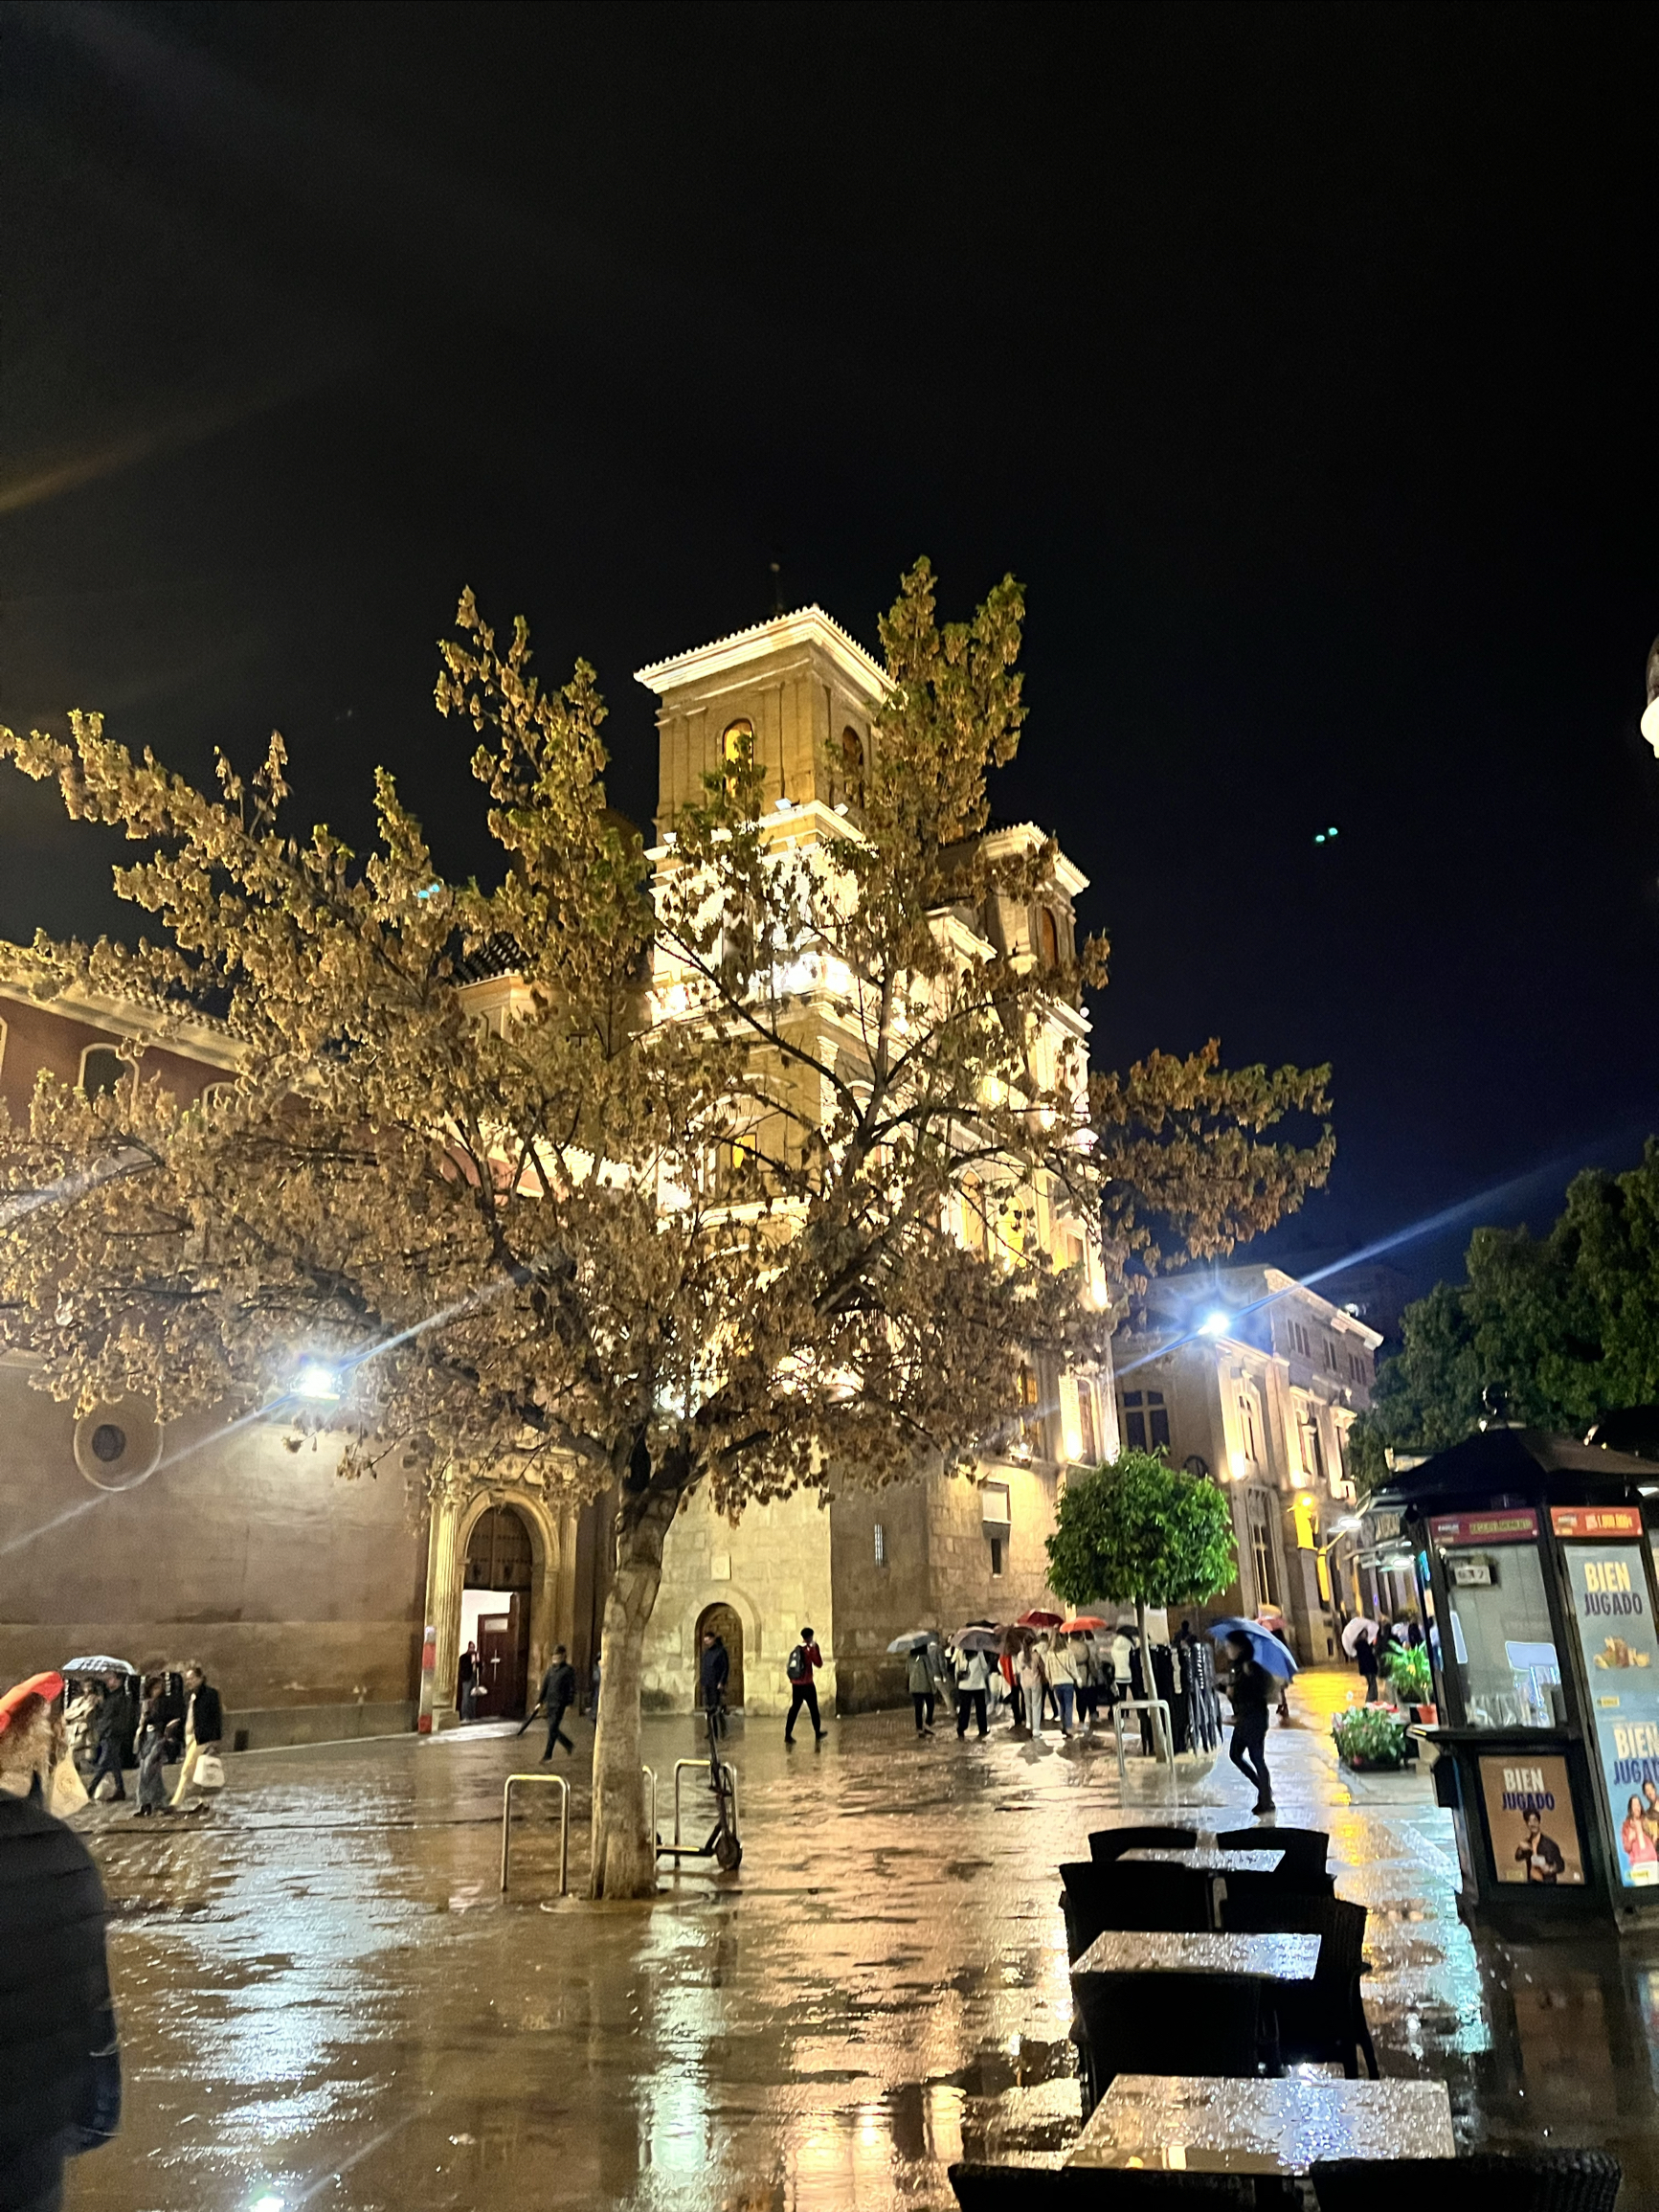 Murcia 市中心，街道非常干净. 市中心两个教堂，都有非常悠久的历史，建筑年代都超过百年. 今天